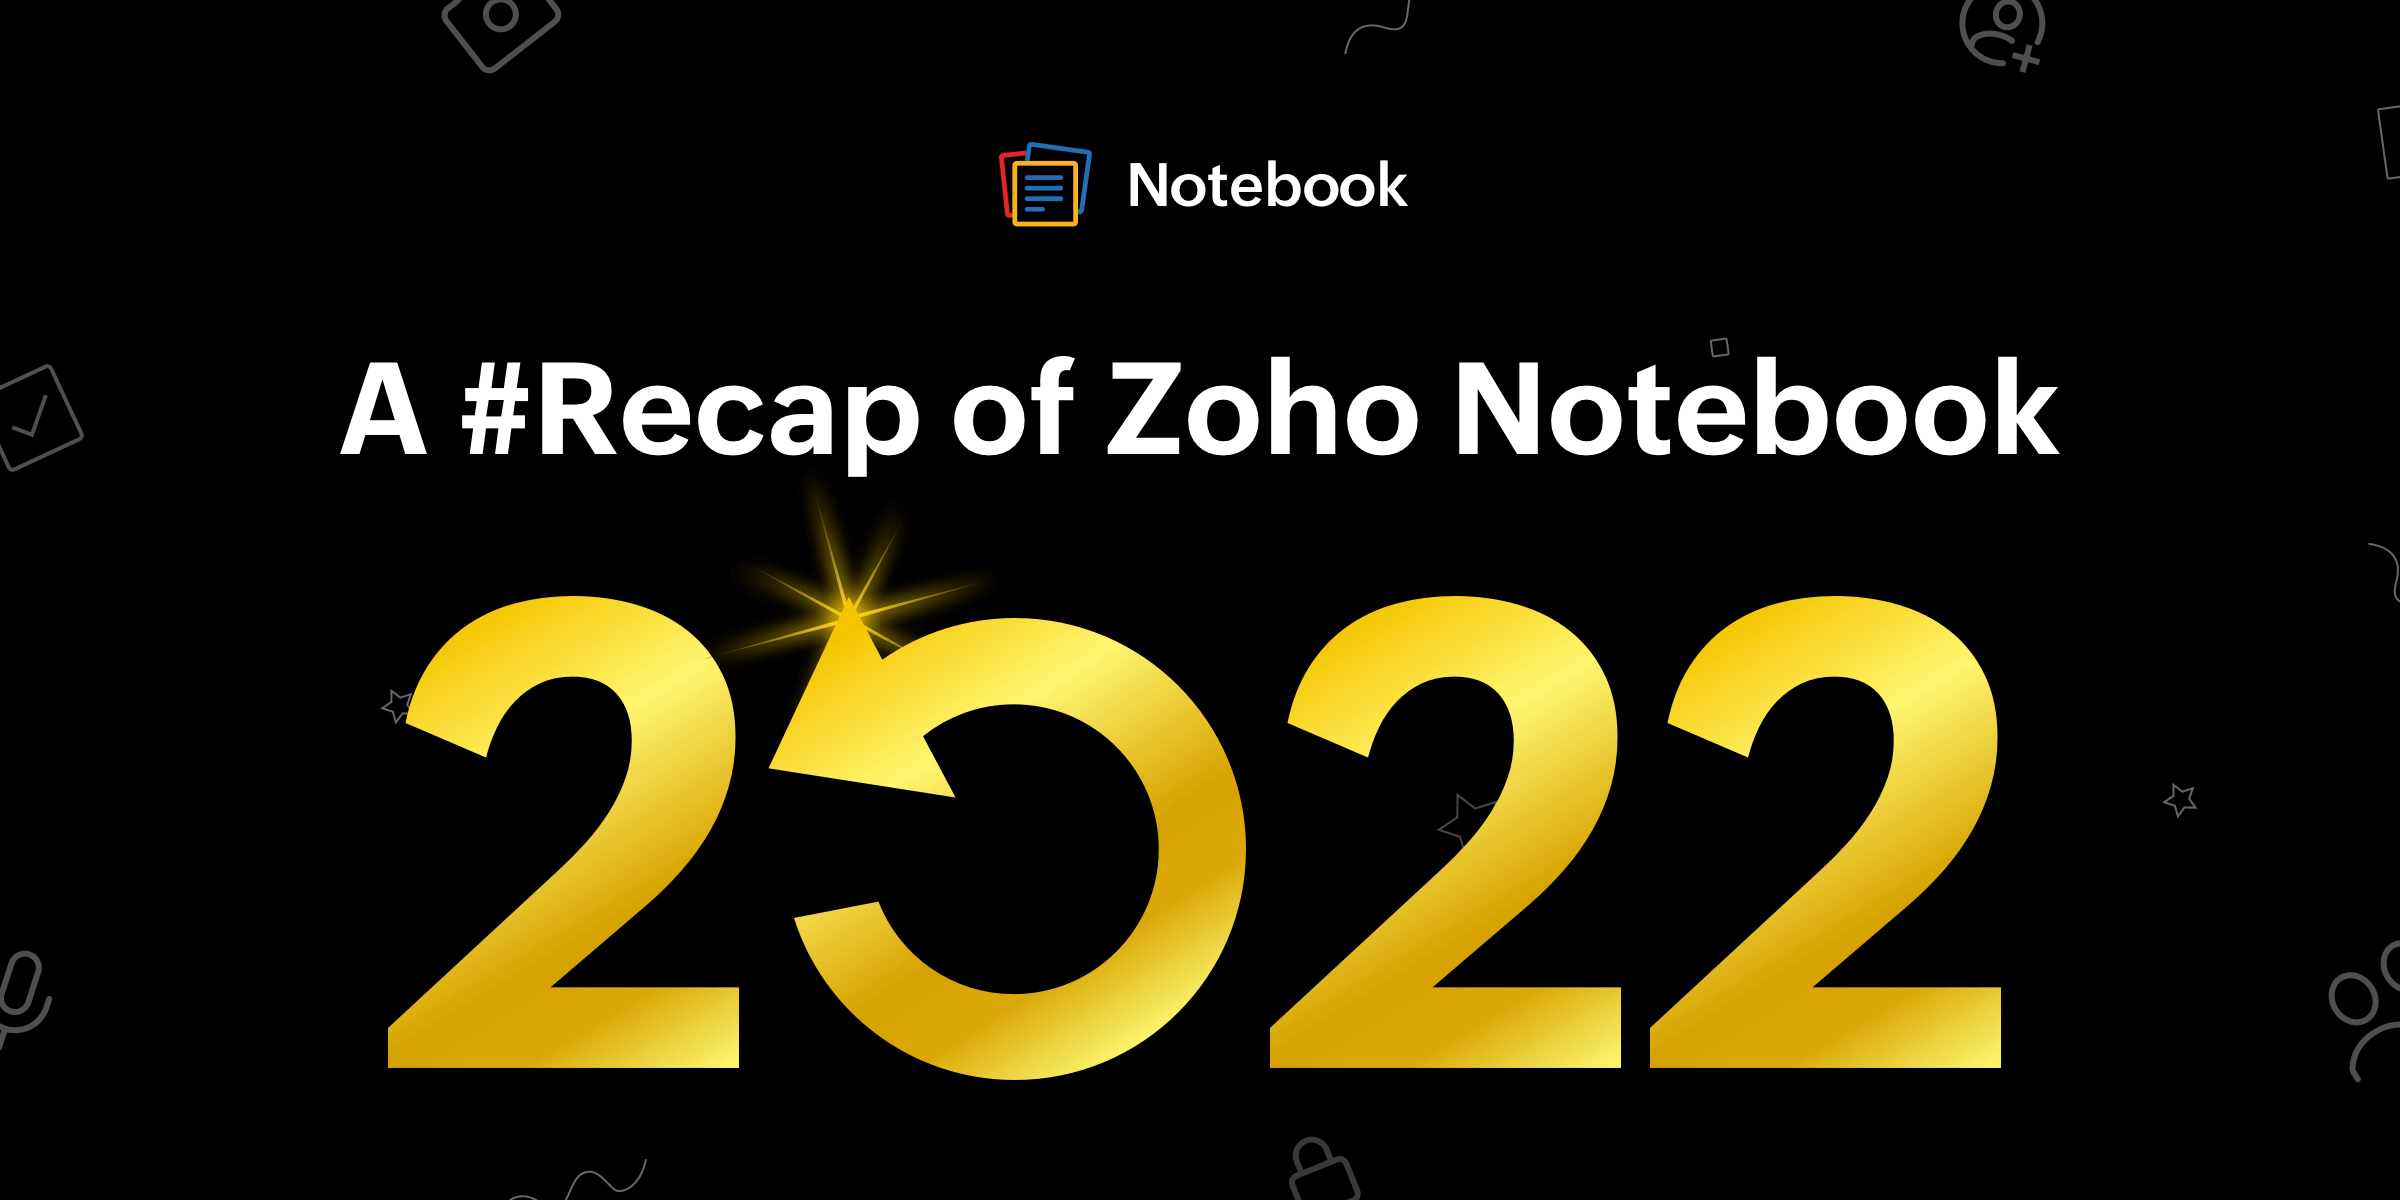 A #Recap of Zoho Notebook in 2022